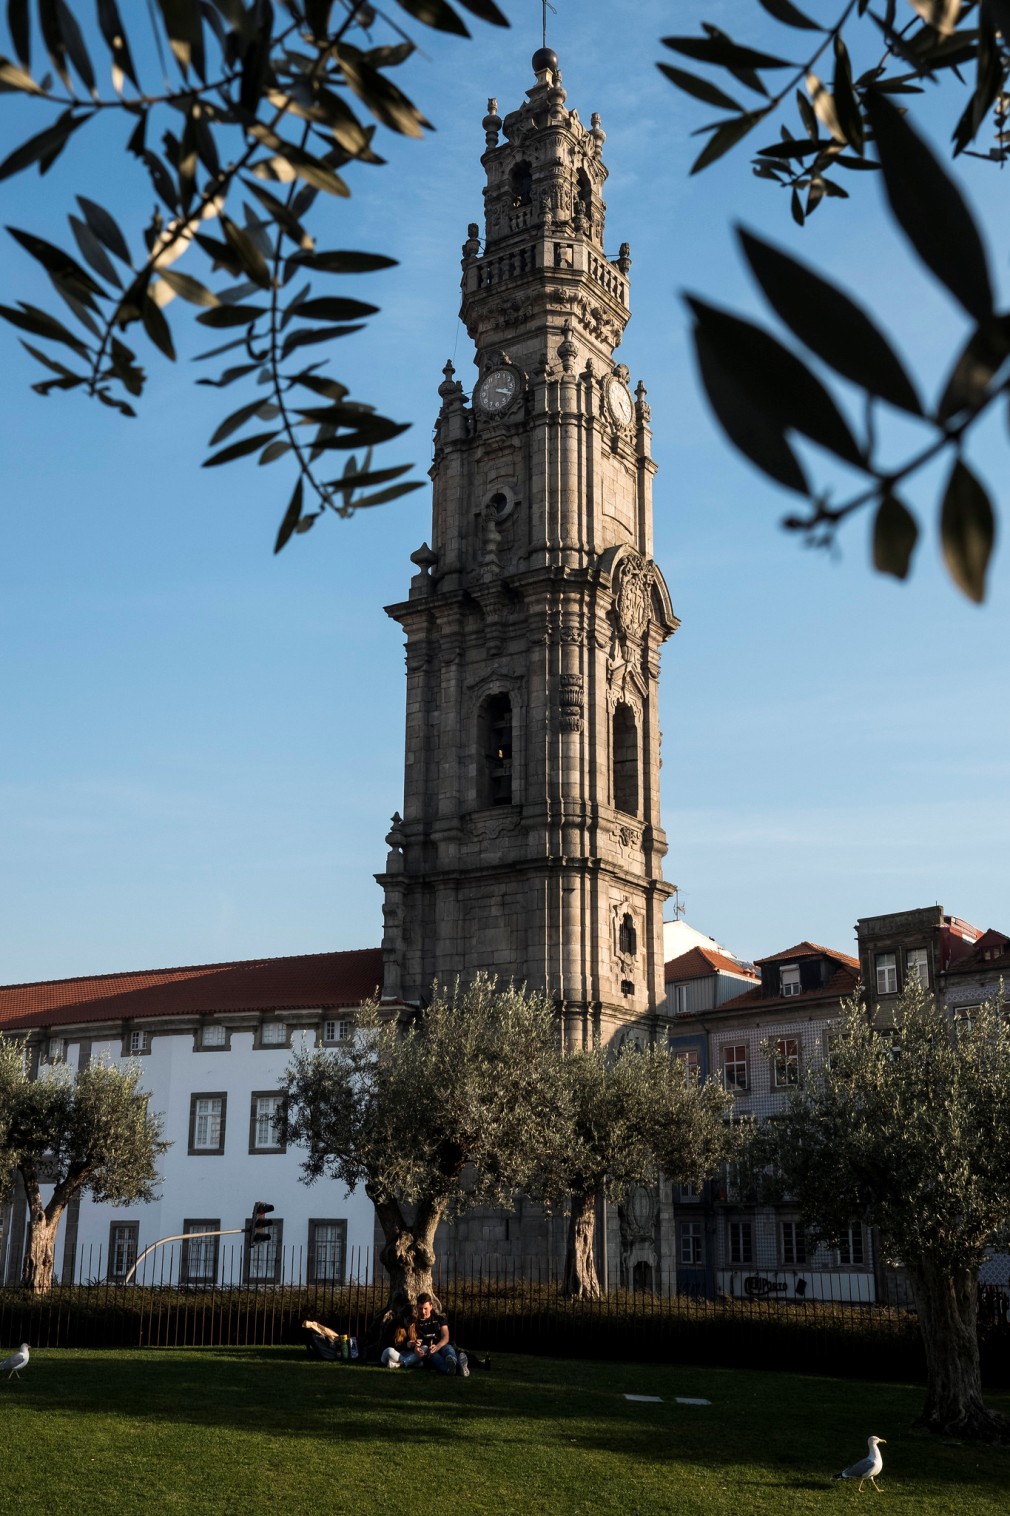 Clérigos Tower - Monuments